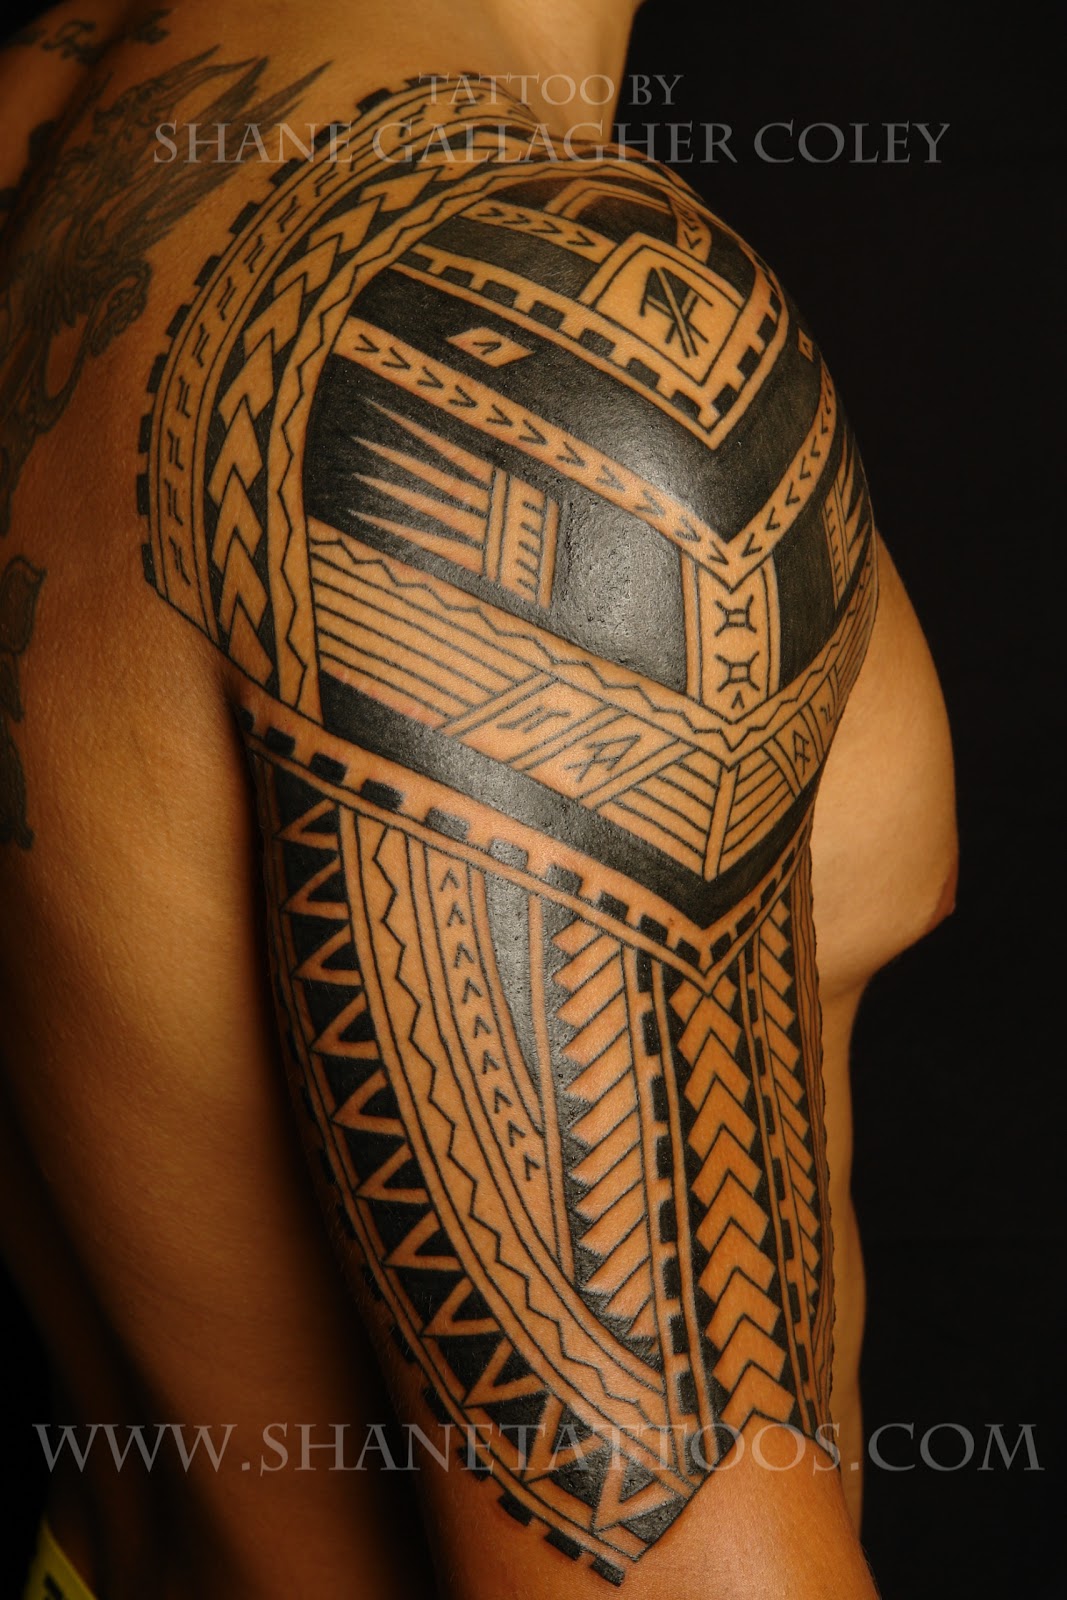 Polynesian/Samoan Sleeve Tattoo (in progress)